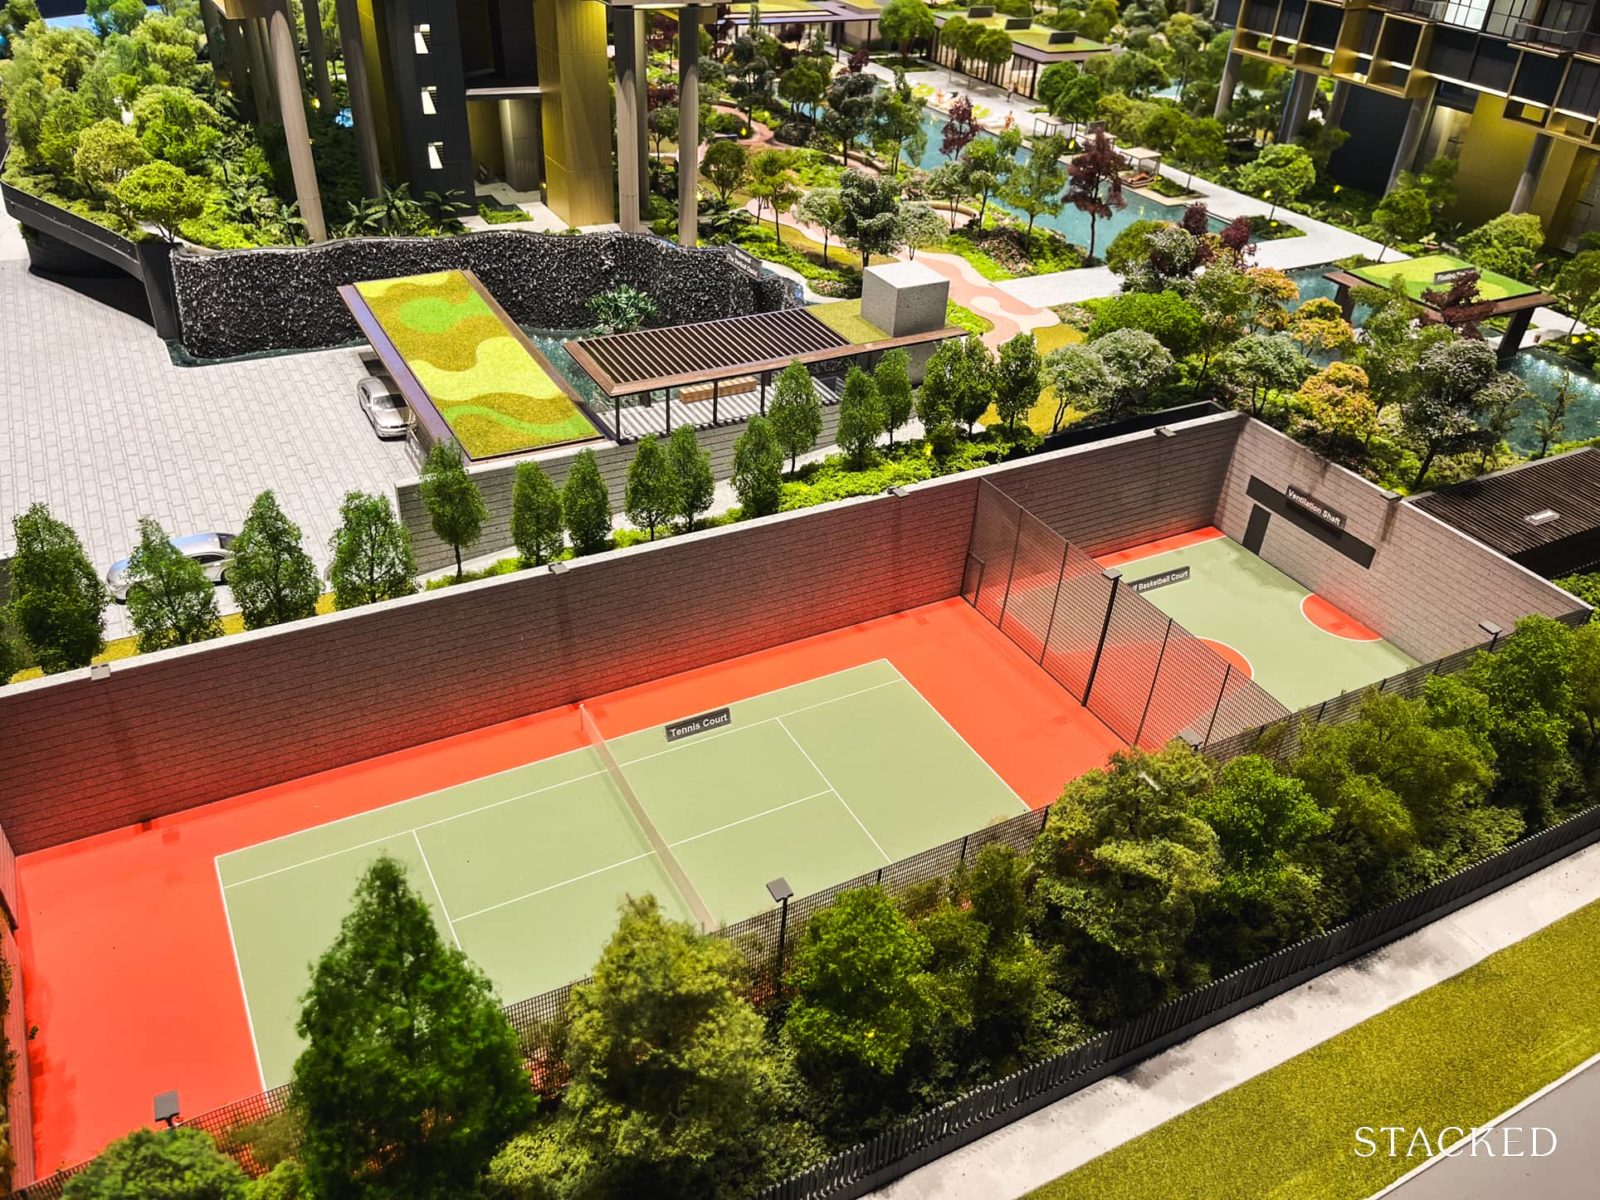 pinetree hill model 9 tennis court